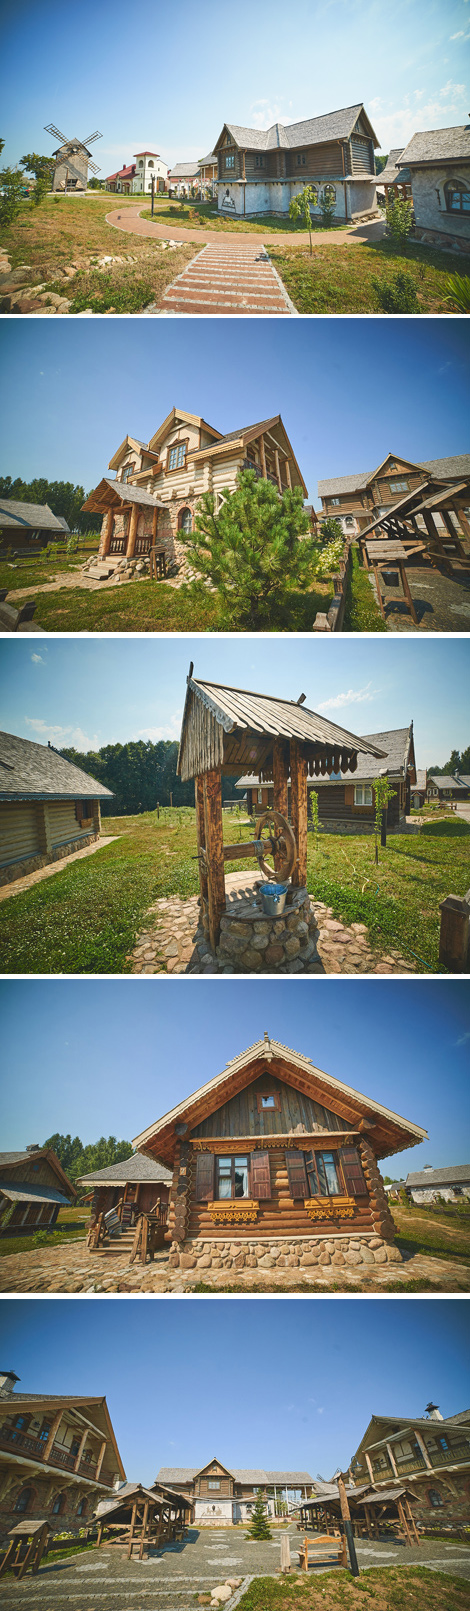 Ethno-cultural complex Nanosy-Novoselye